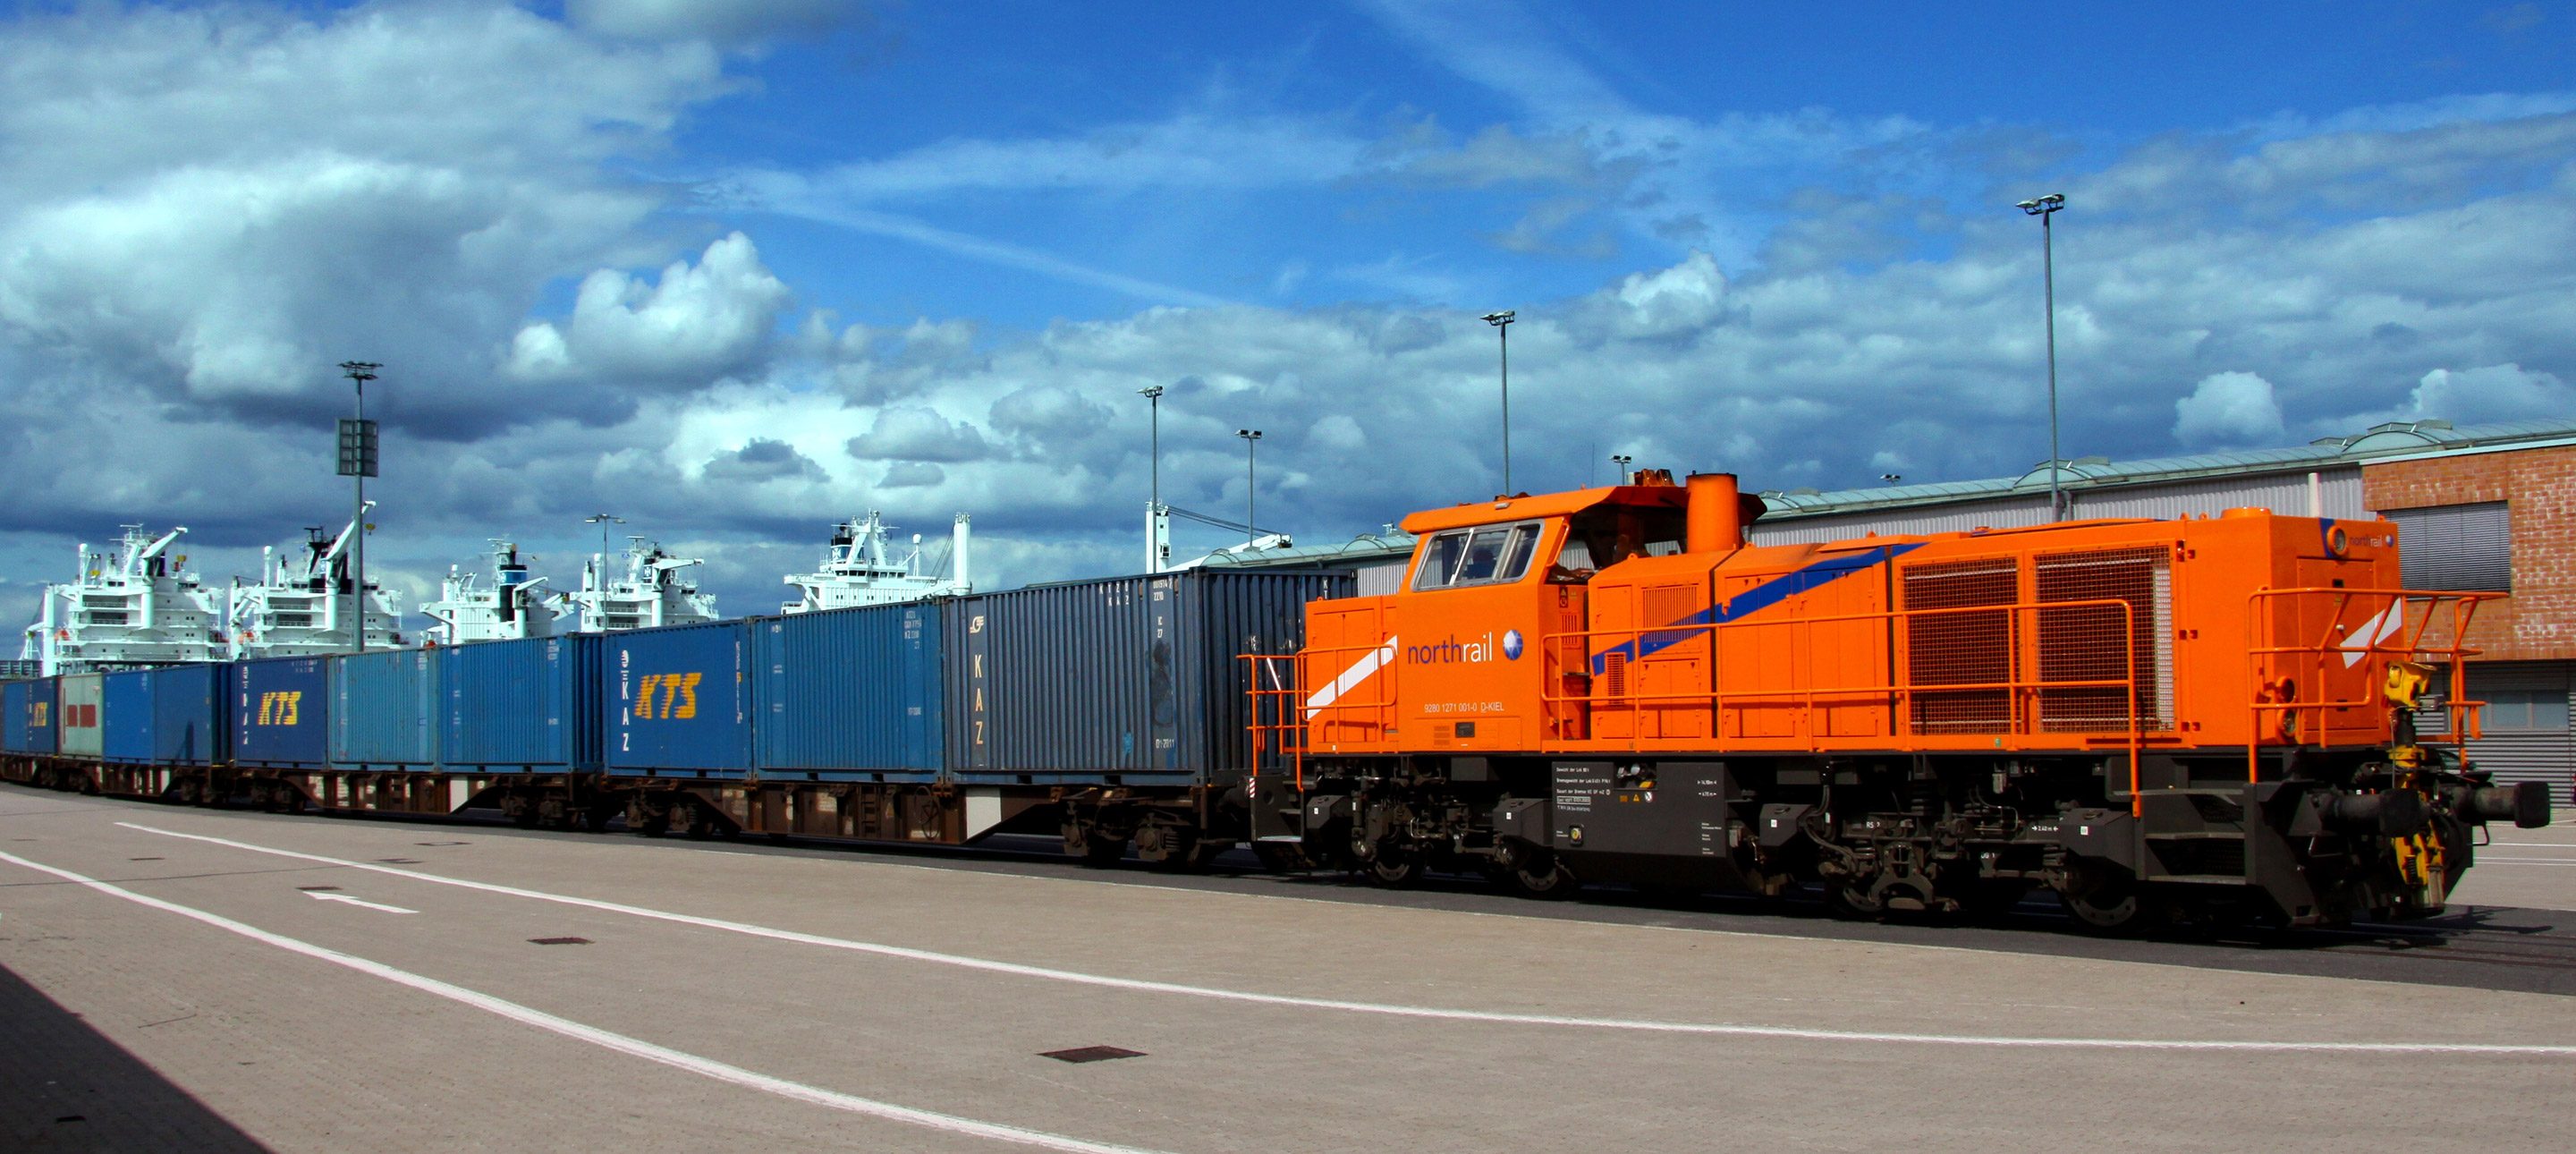 northrail-locomotive at the port